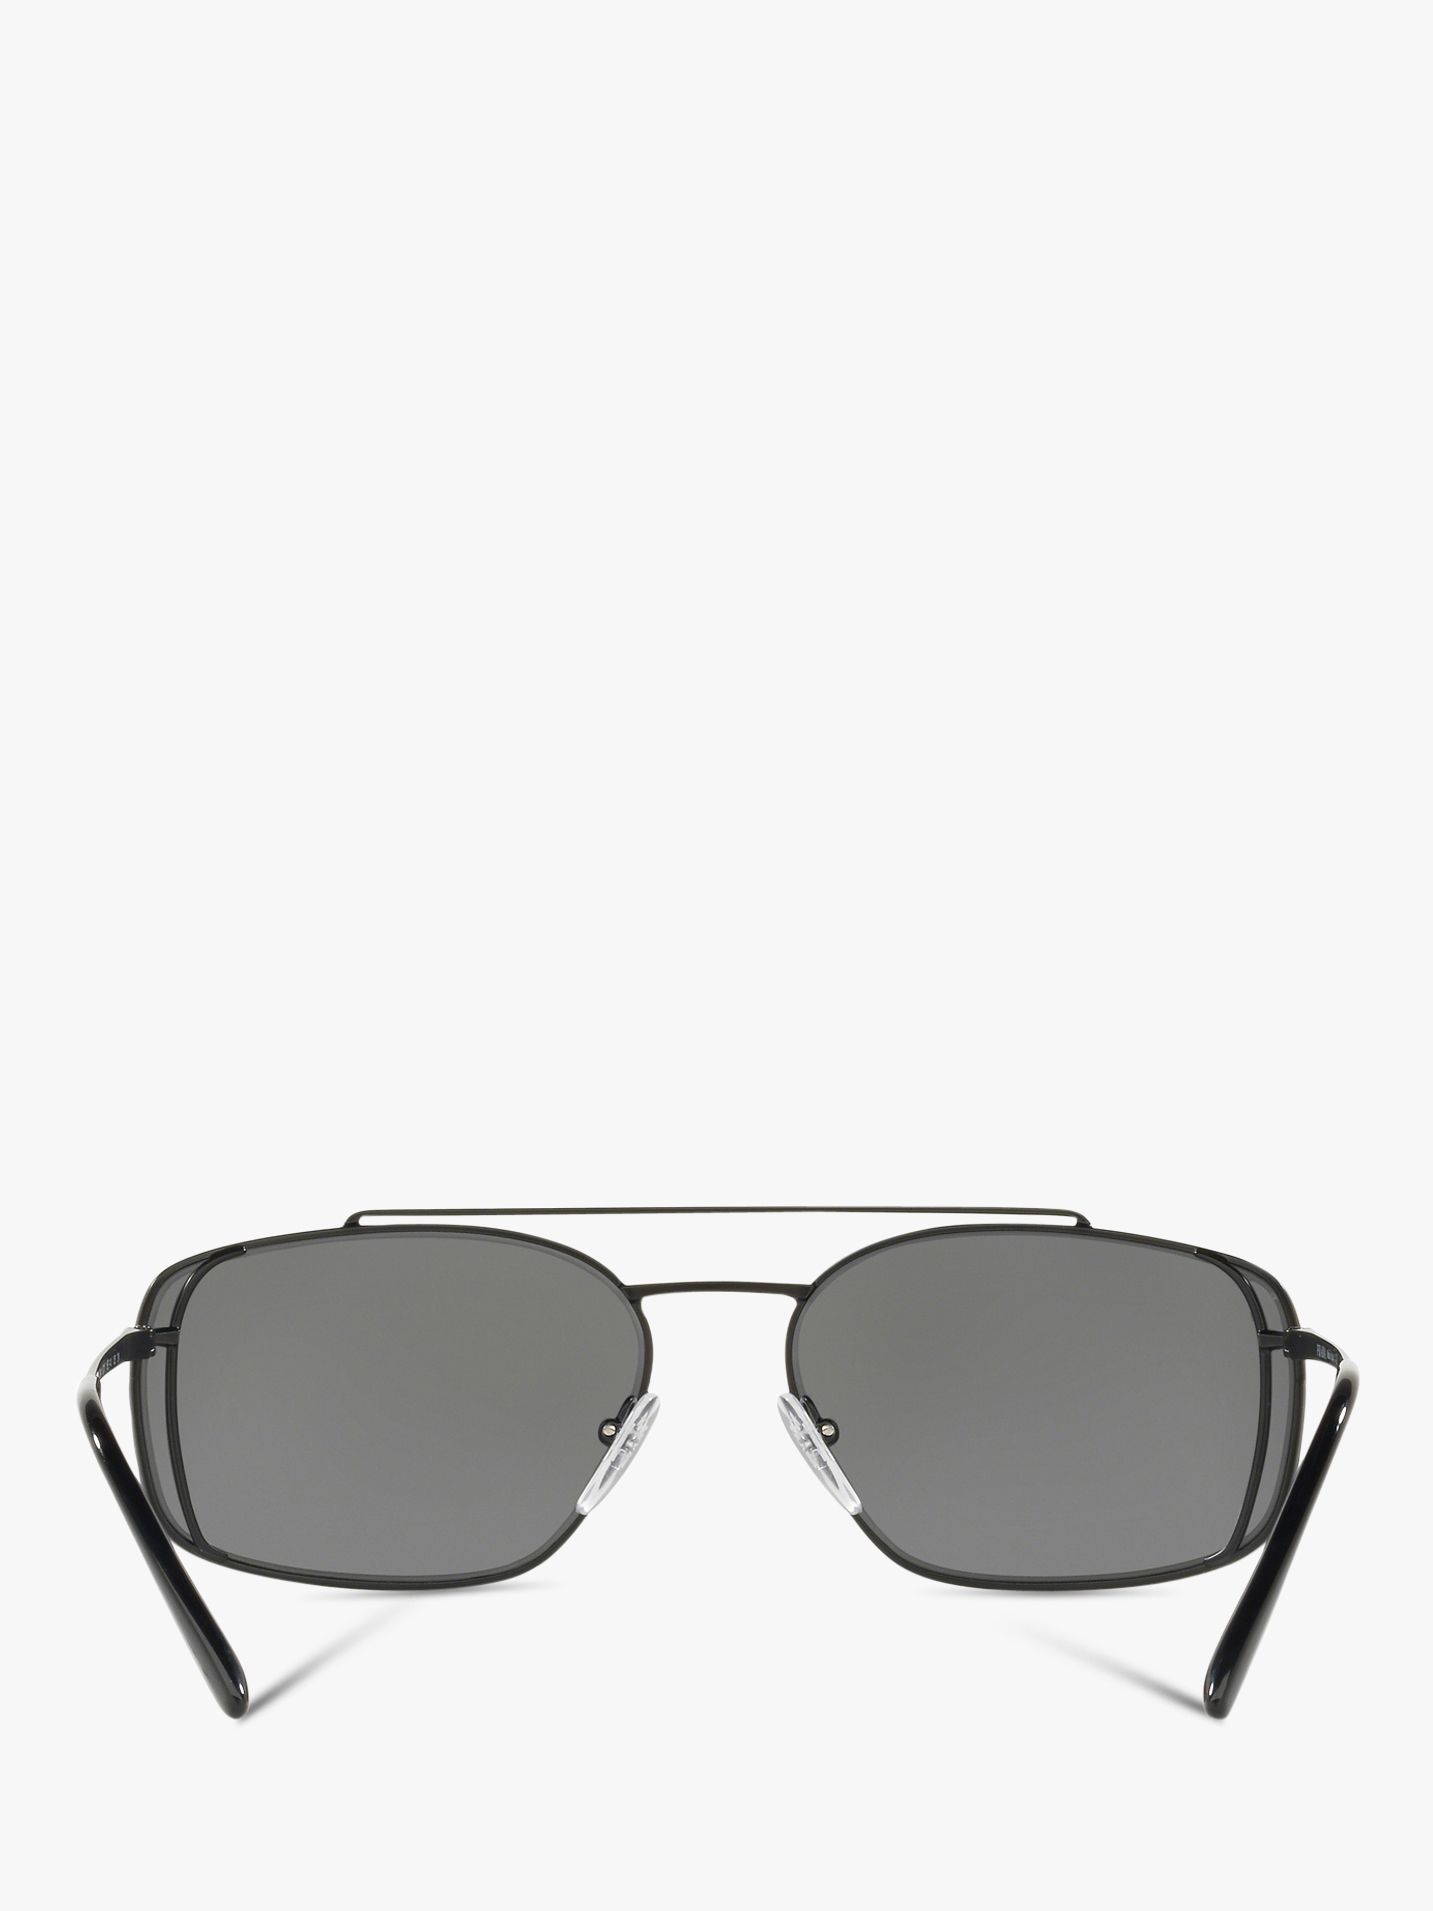 Prada PR 64VS Men's Rectangular Sunglasses, Black/Grey